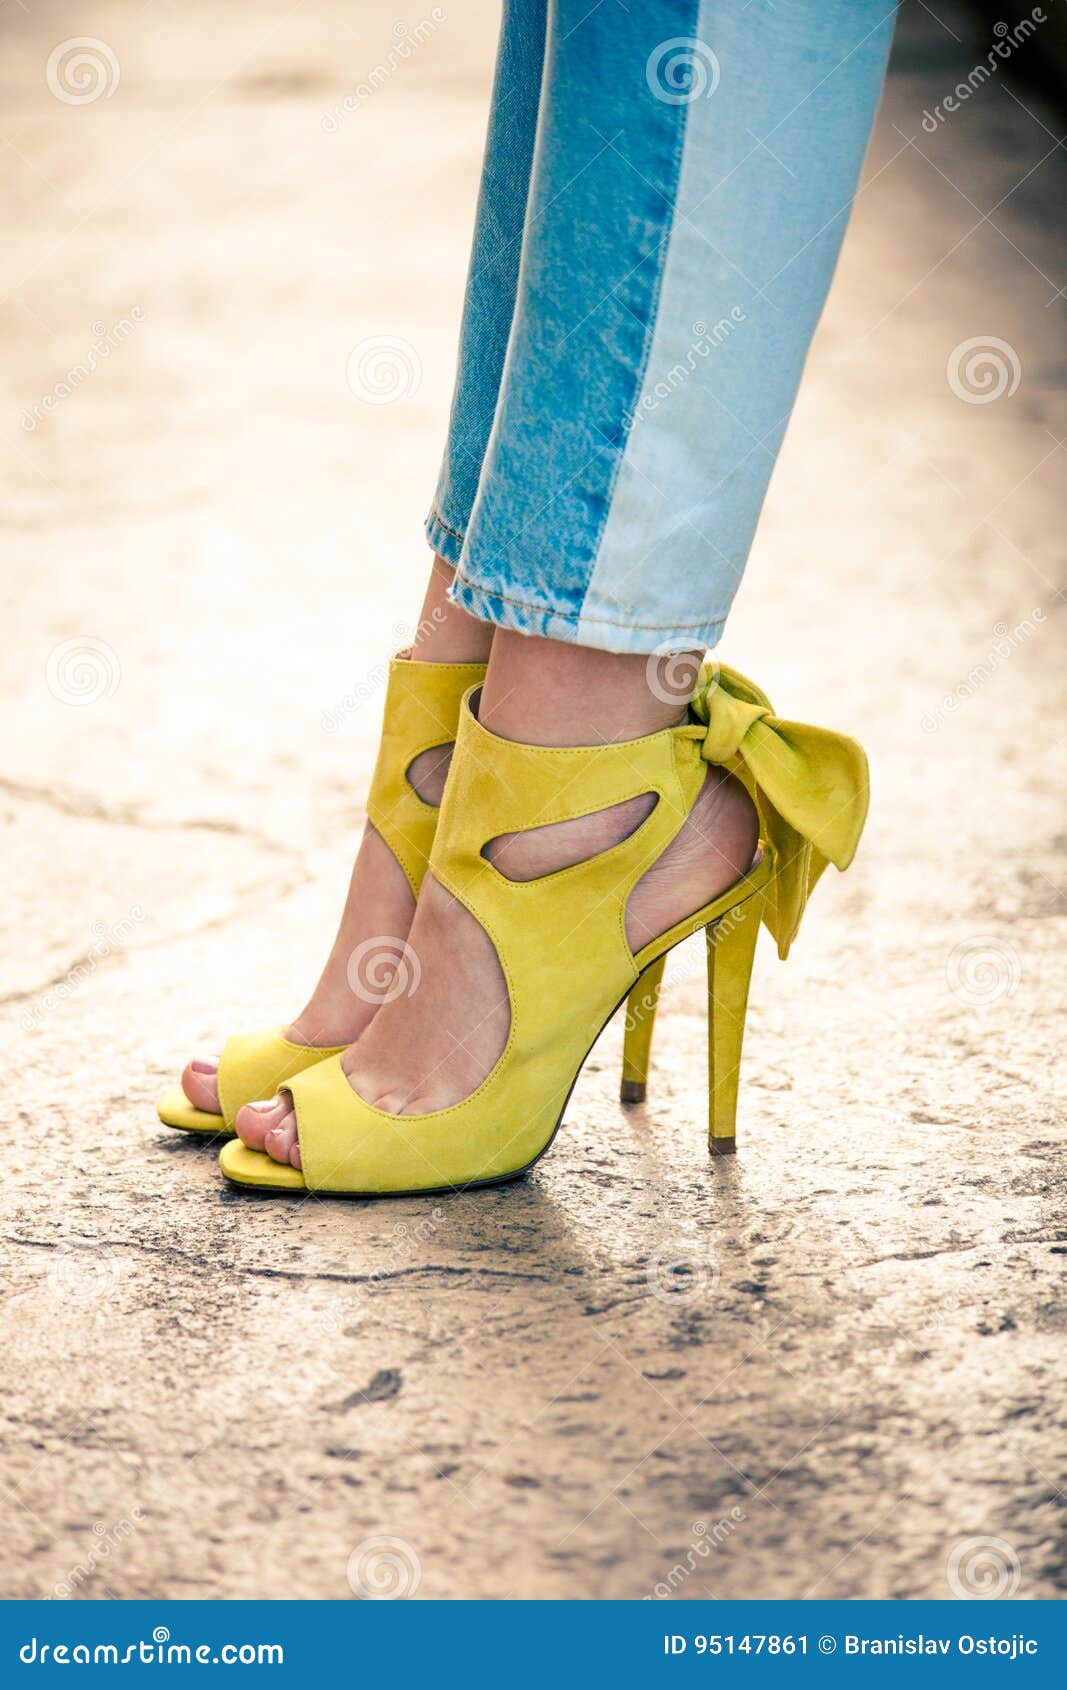 sandali gialli tacco alto